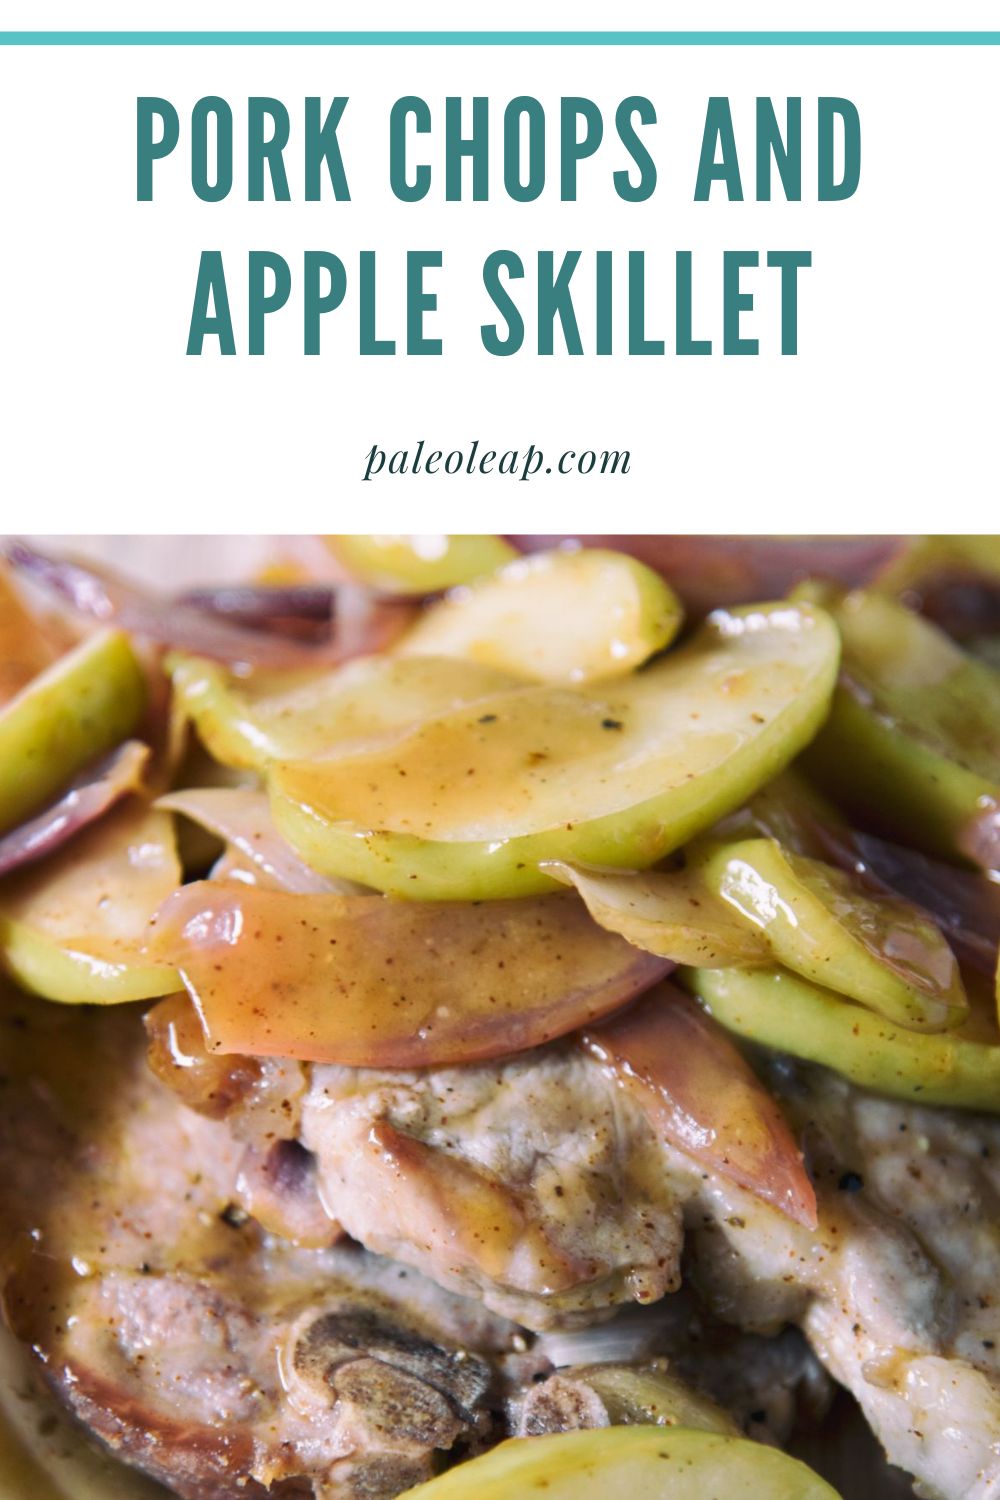 Pork Chops And Apple Skillet Recipe | Paleo Leap